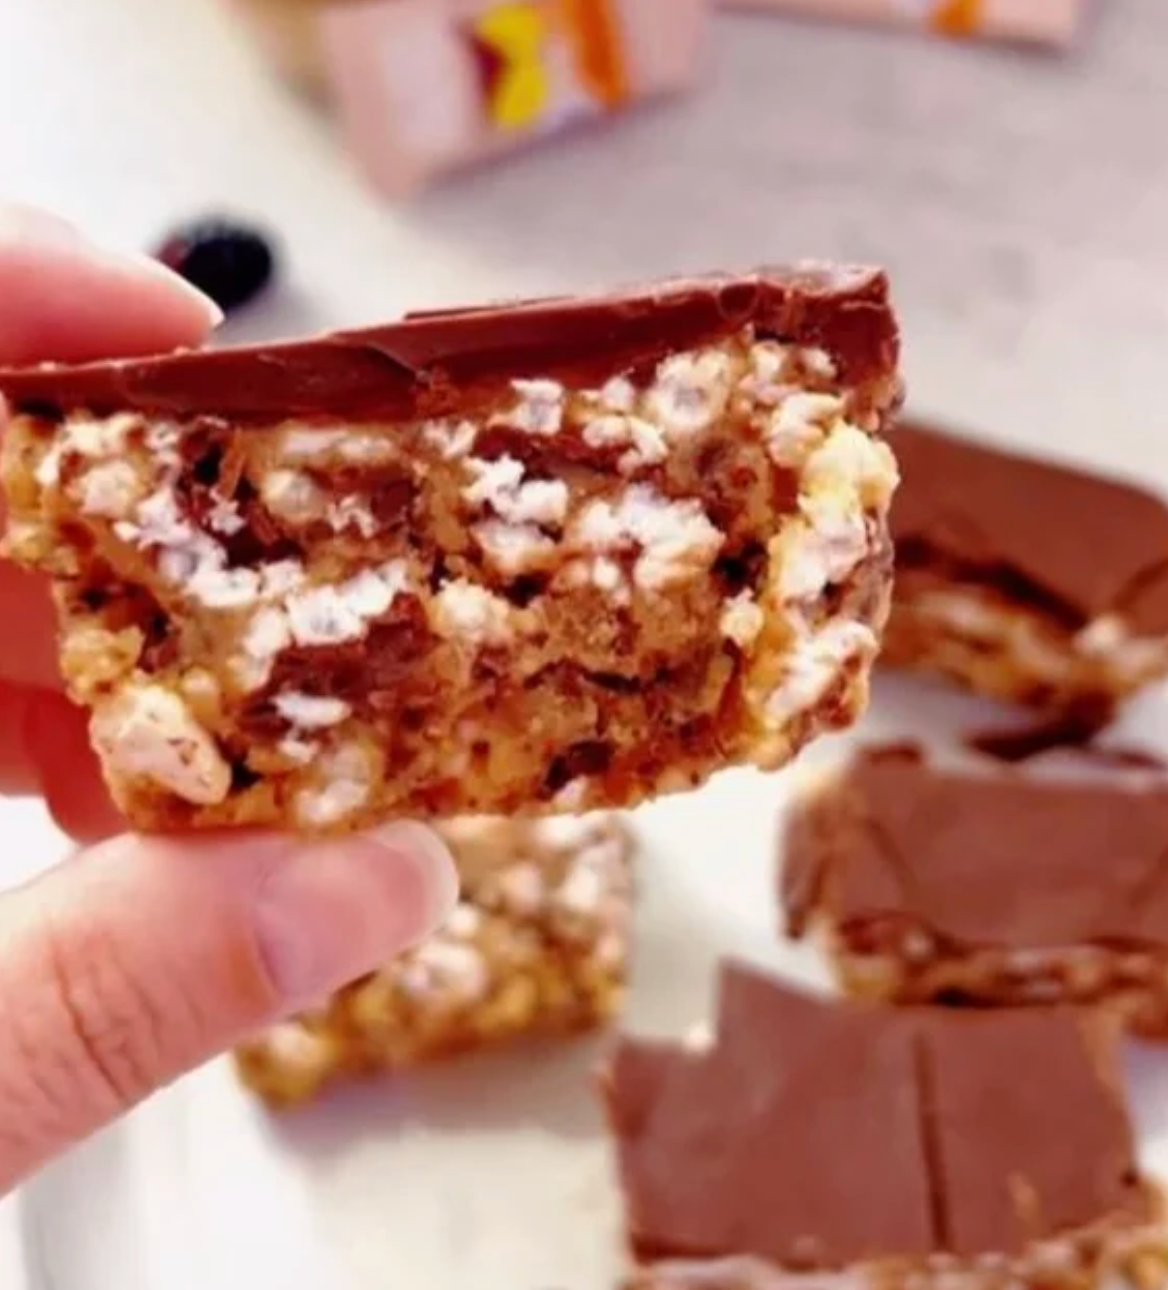 No-bake Chocolate cashew crunch bars by @_healthy_desserts_